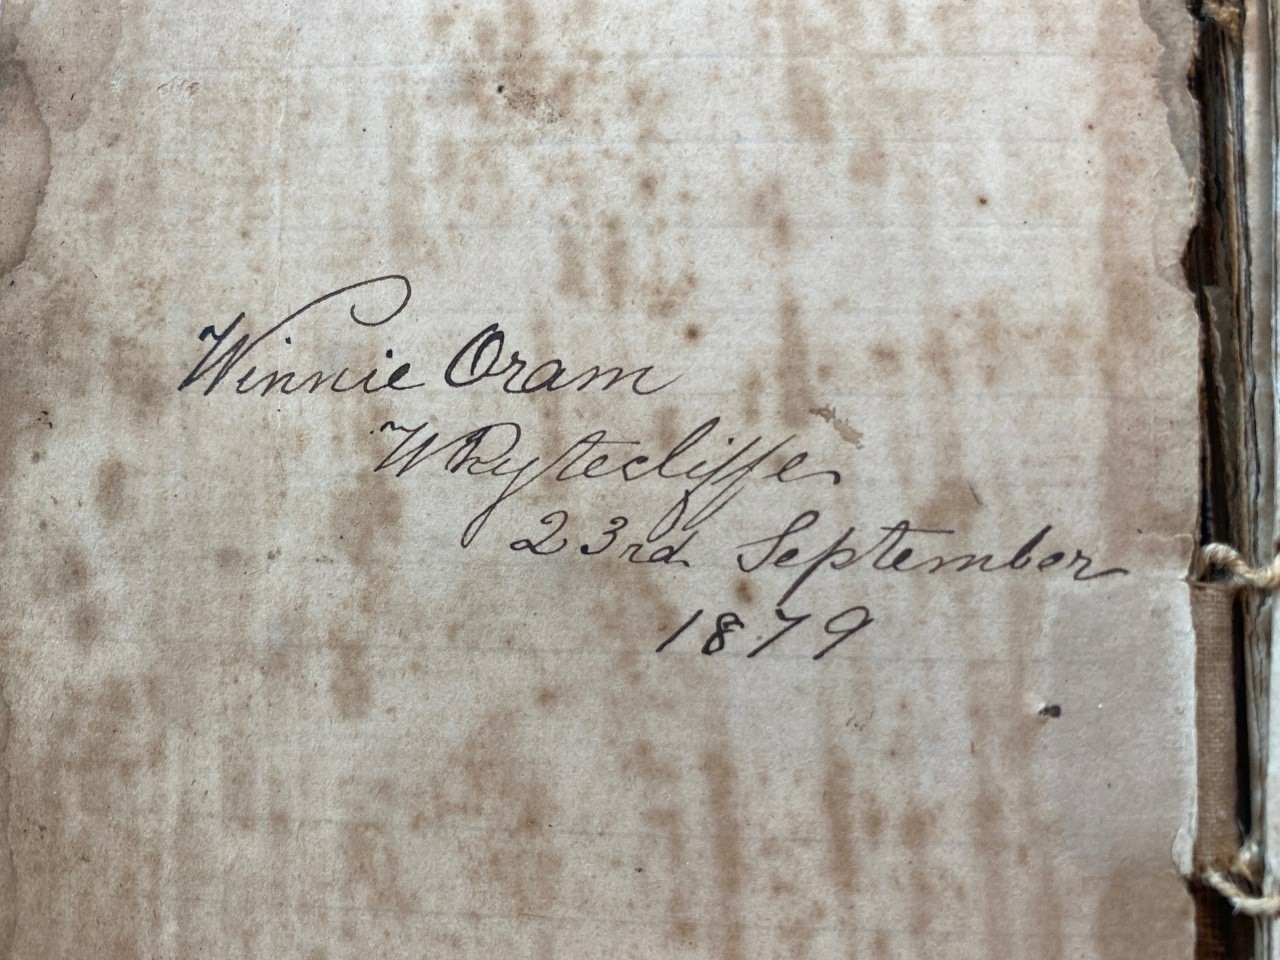 Inscription of Mary Ann Winifred Oram’s Cookbook